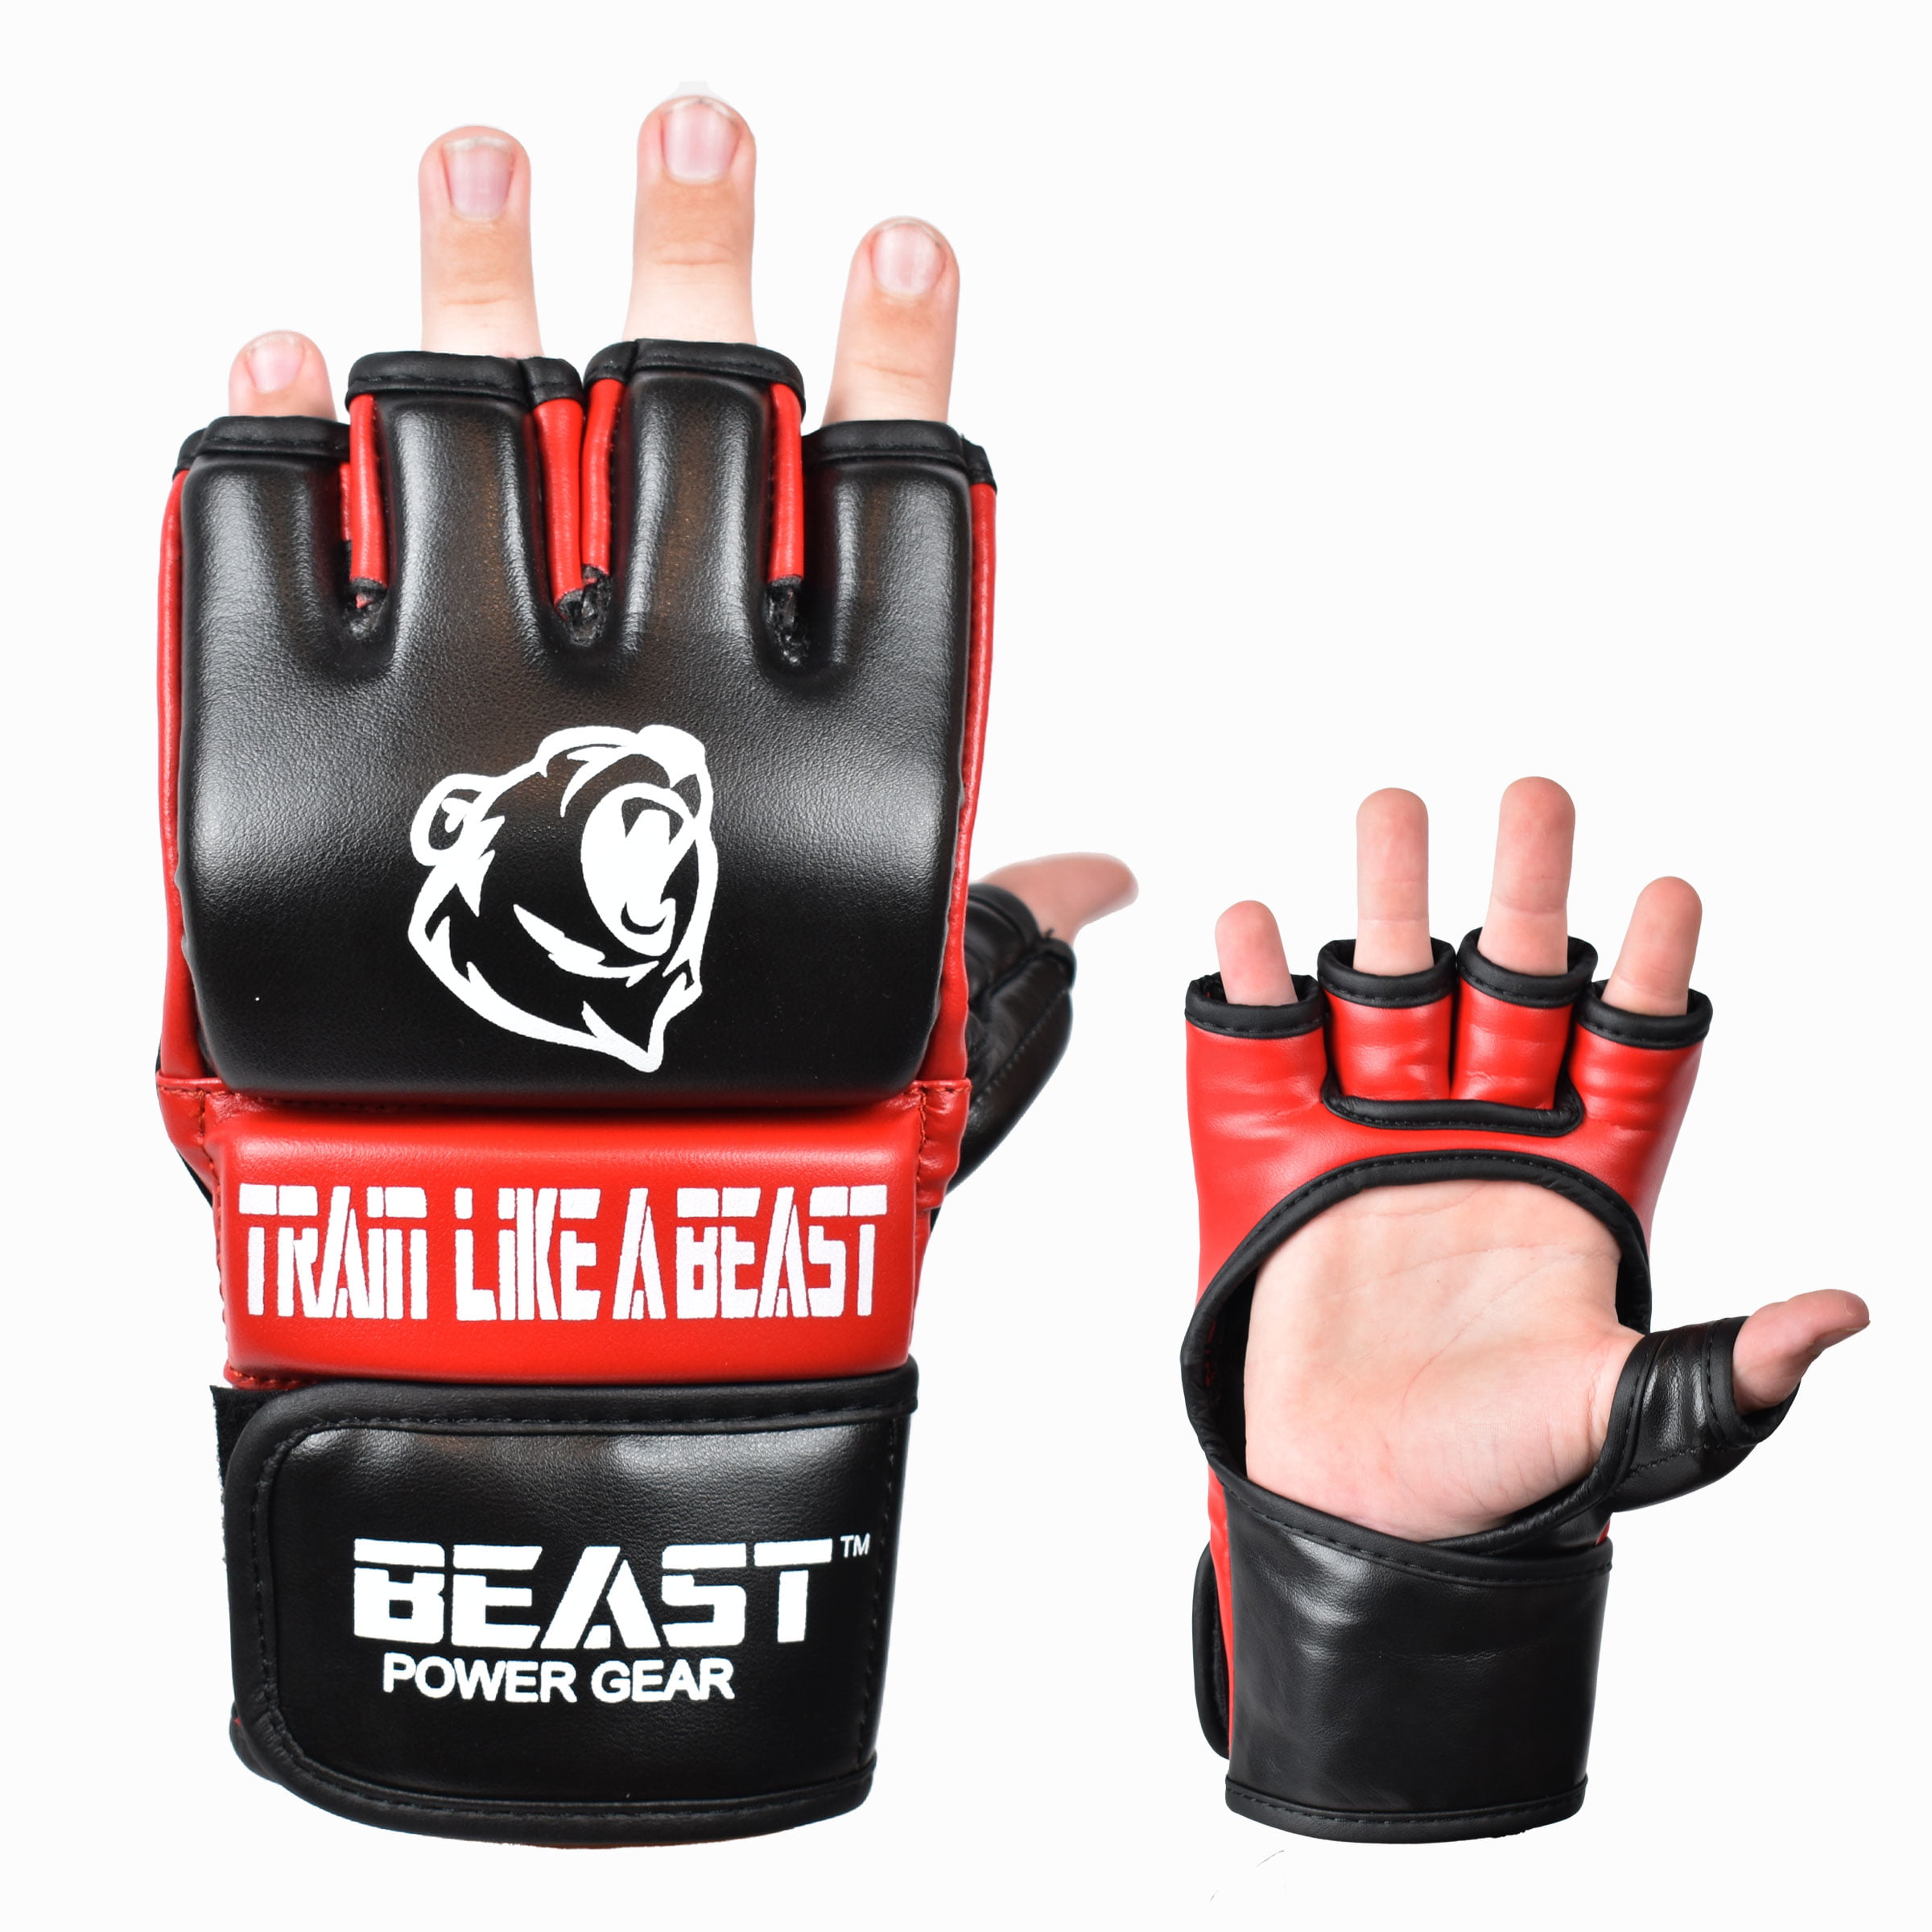 UFC Gloves Kickboxing Gloves with Open Palms Beastpowergear MMA Gloves 